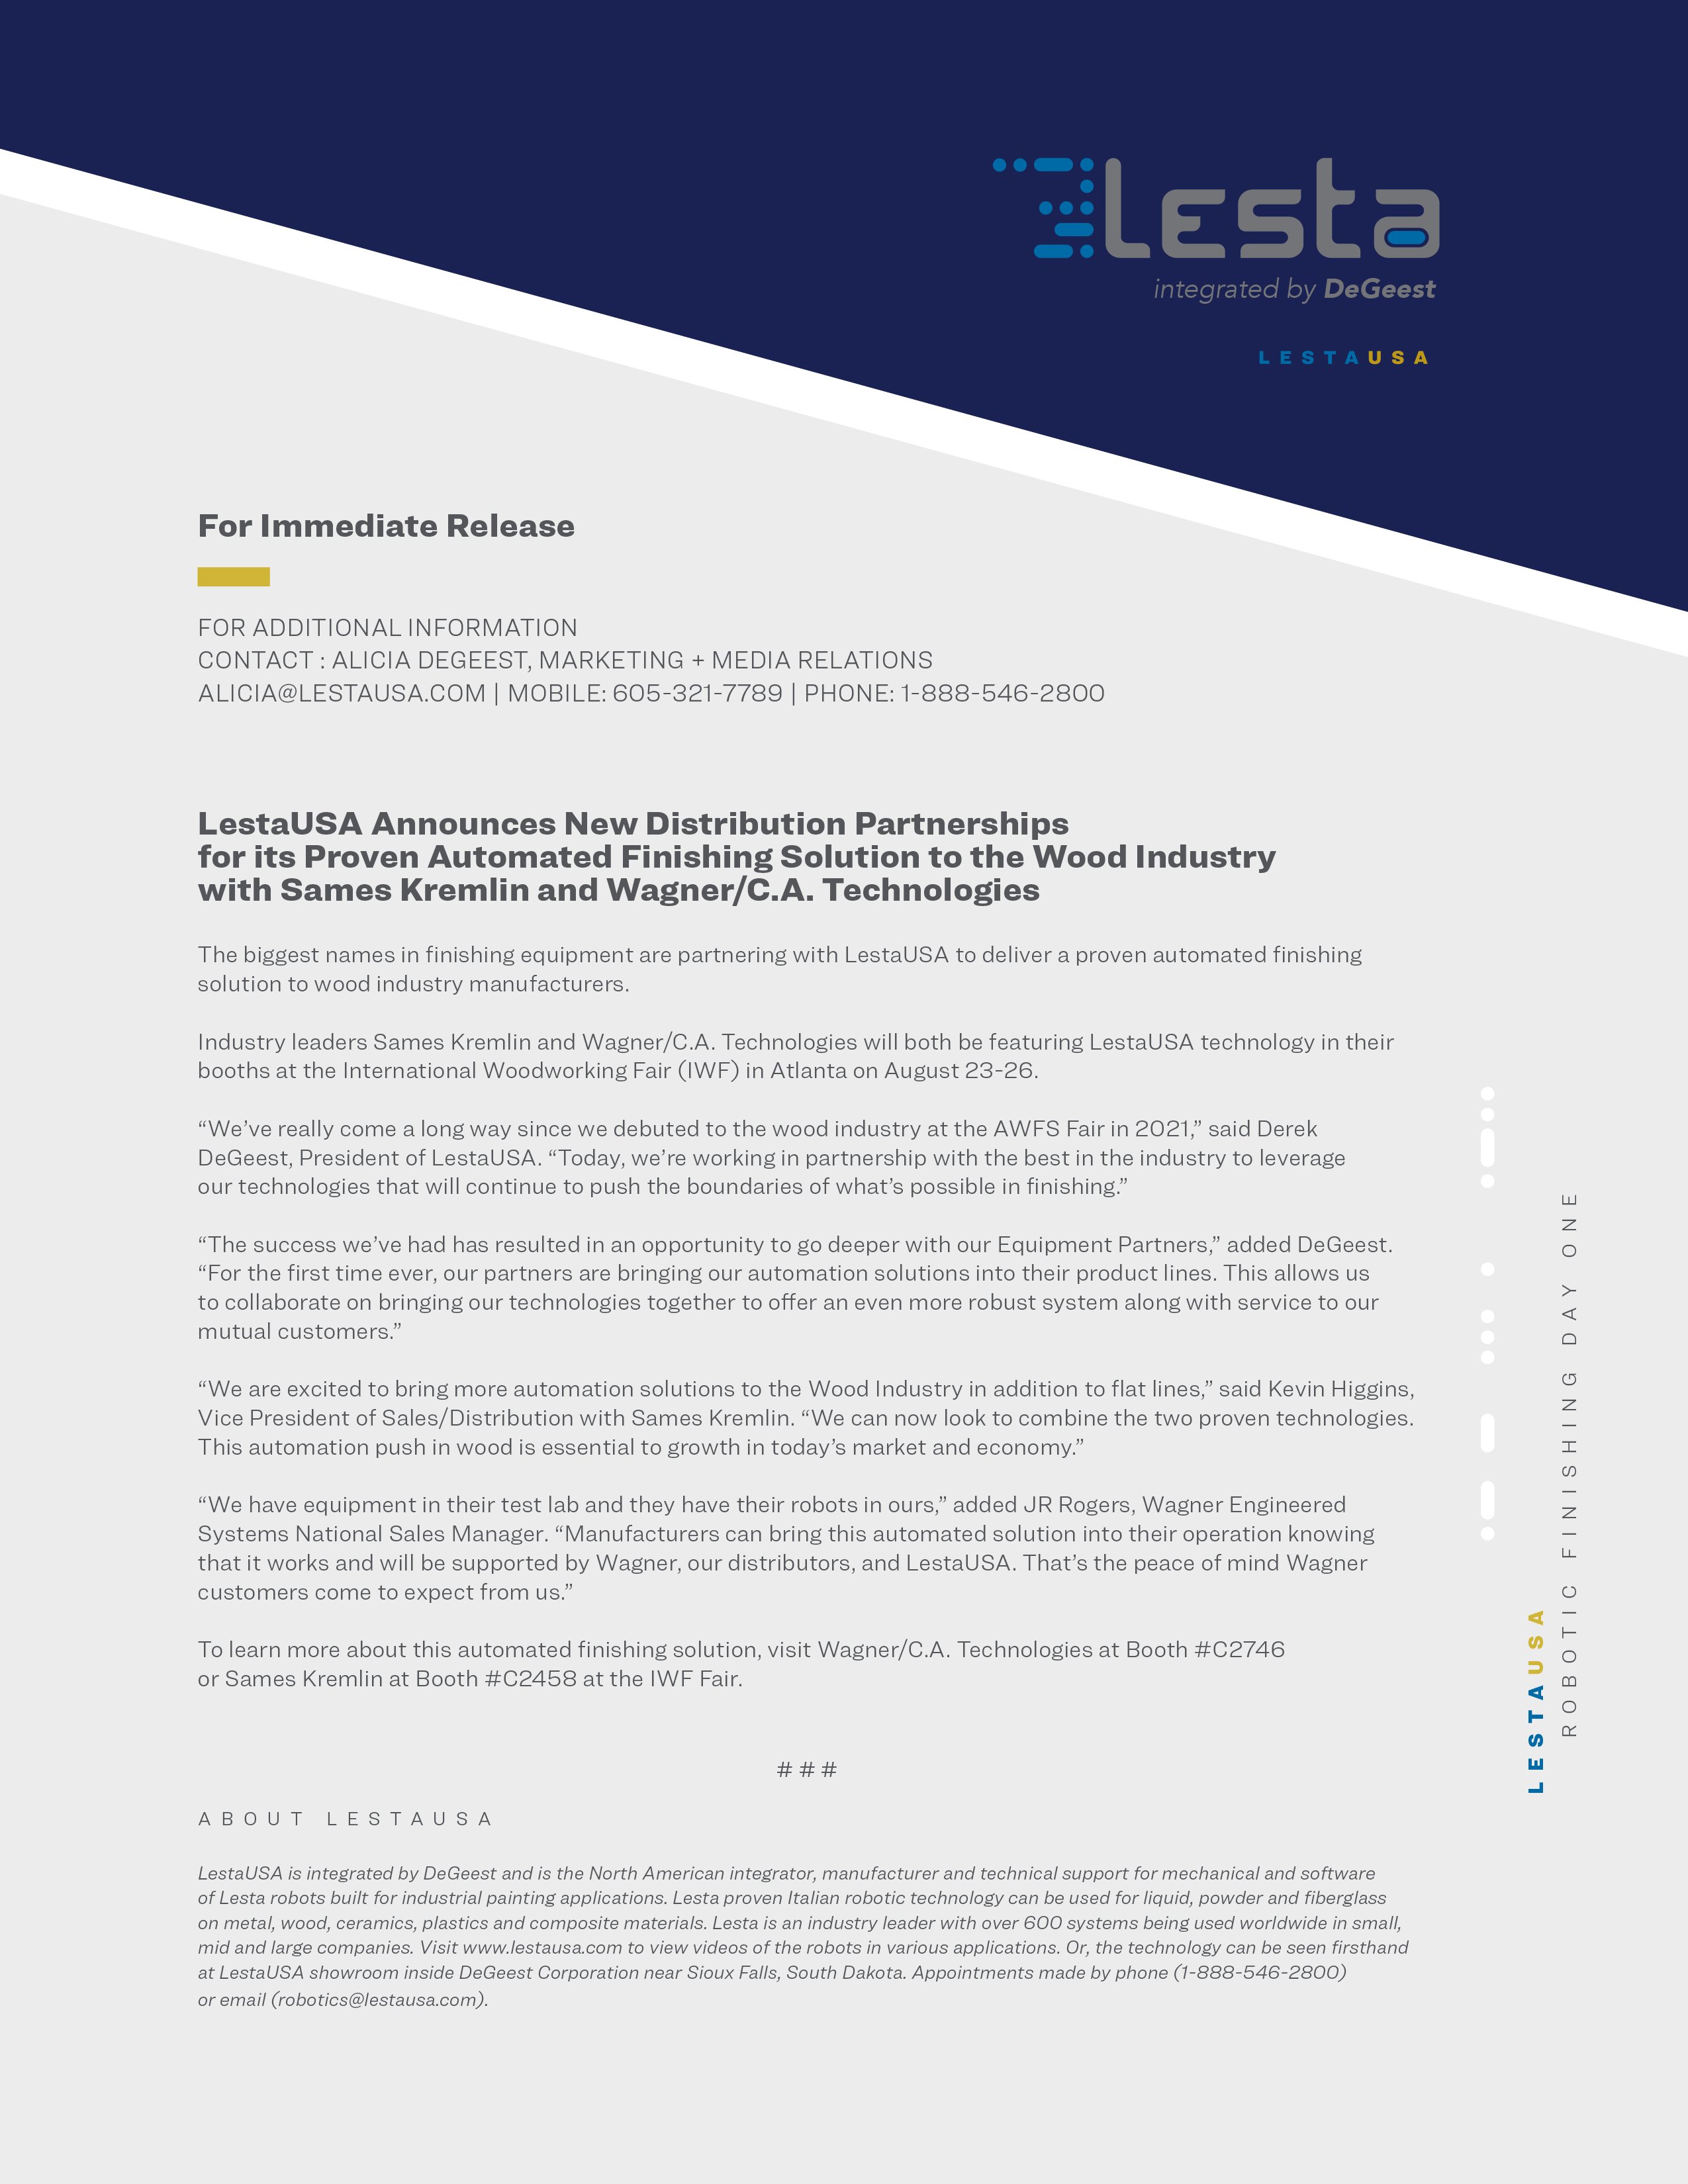 LestaUSA Announces New Distribution Partnerships IWF Press Release